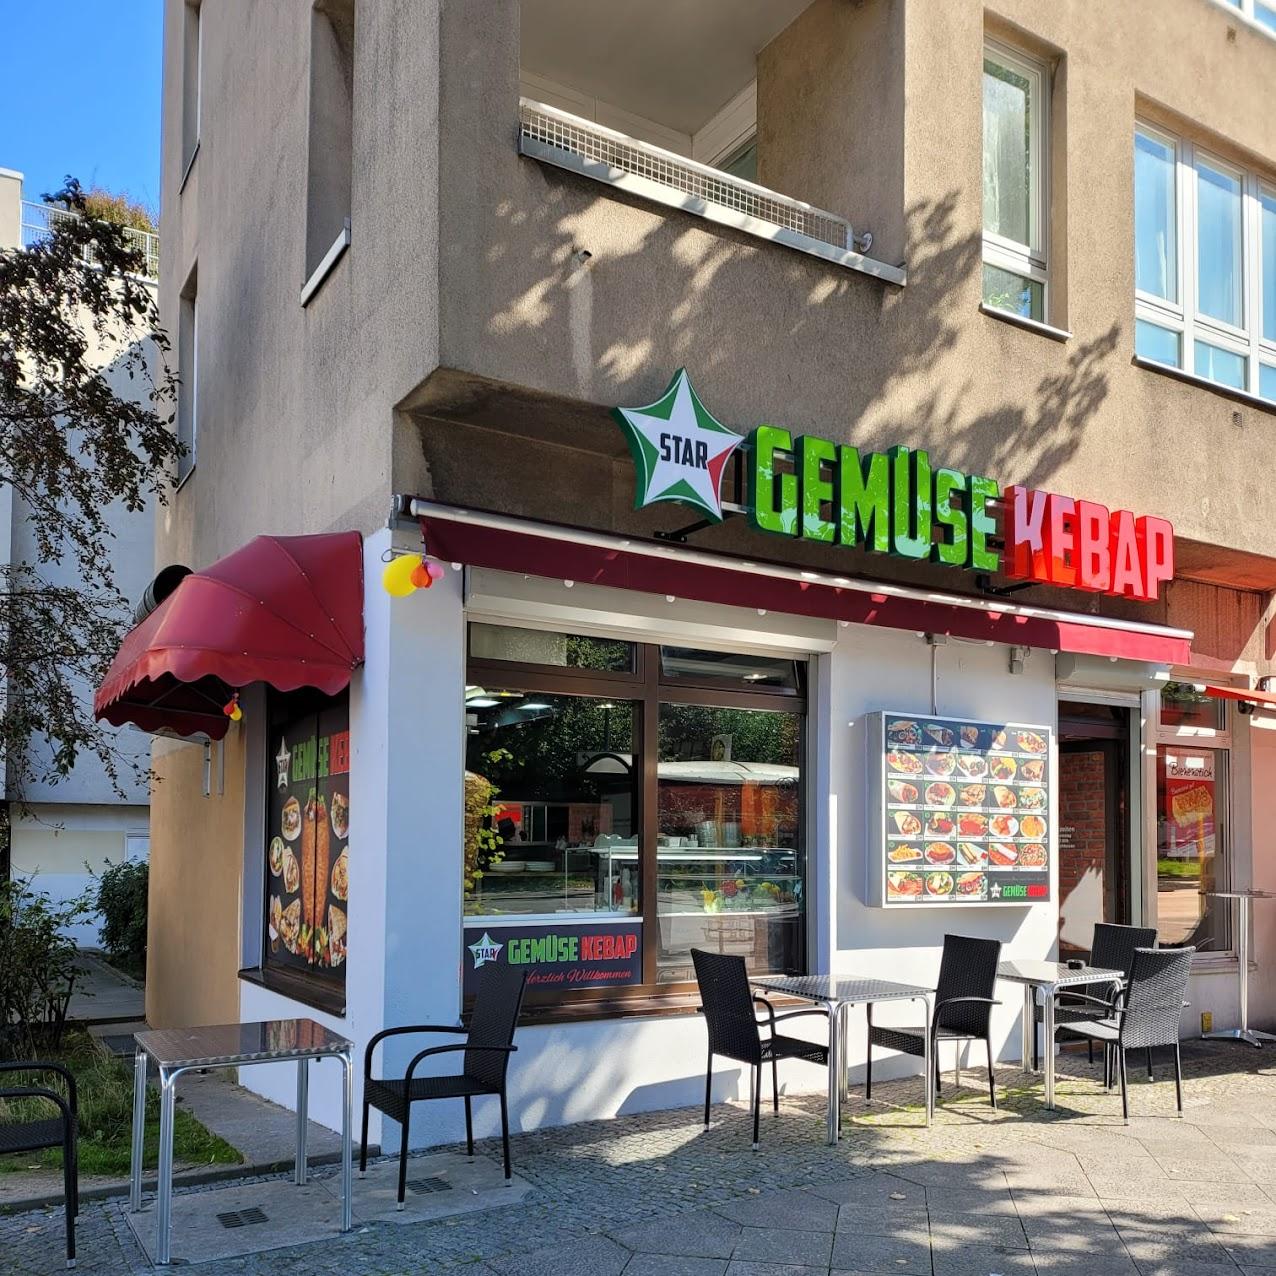 Restaurant "STAR Gemüse Kebap" in Berlin